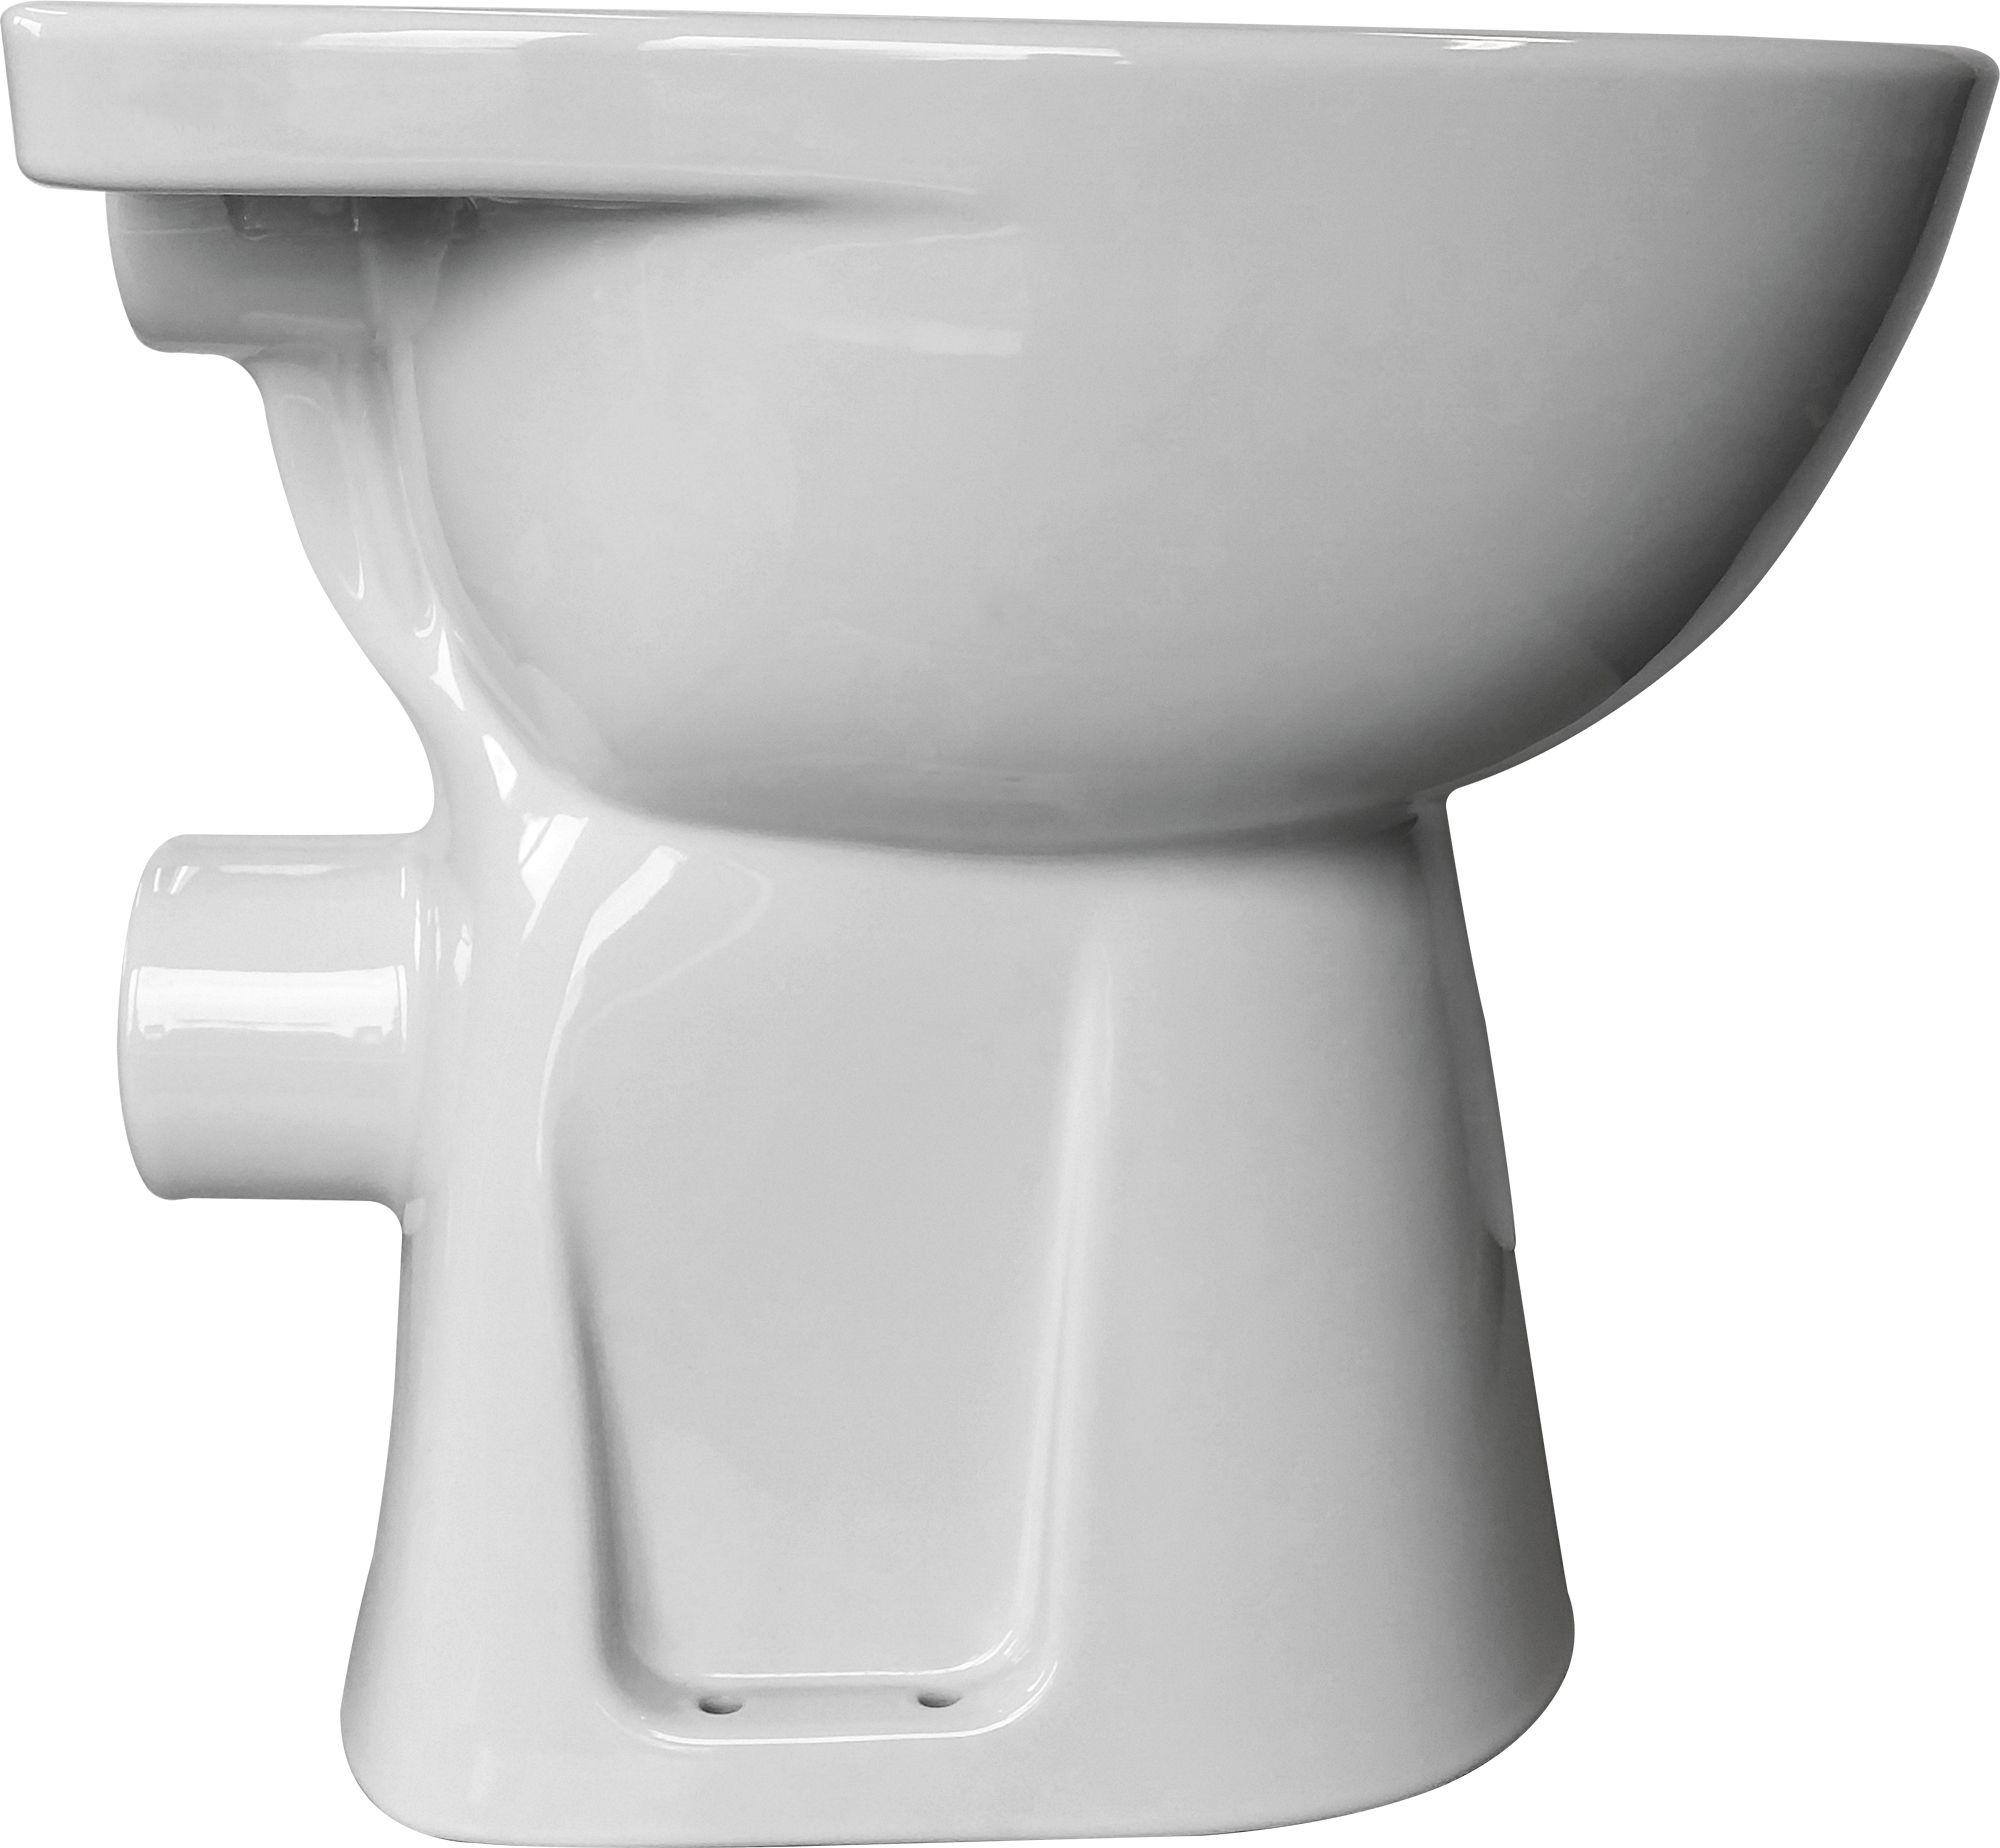 SYDNEY floor mounted toilet bowl, +6 cm, P-trap